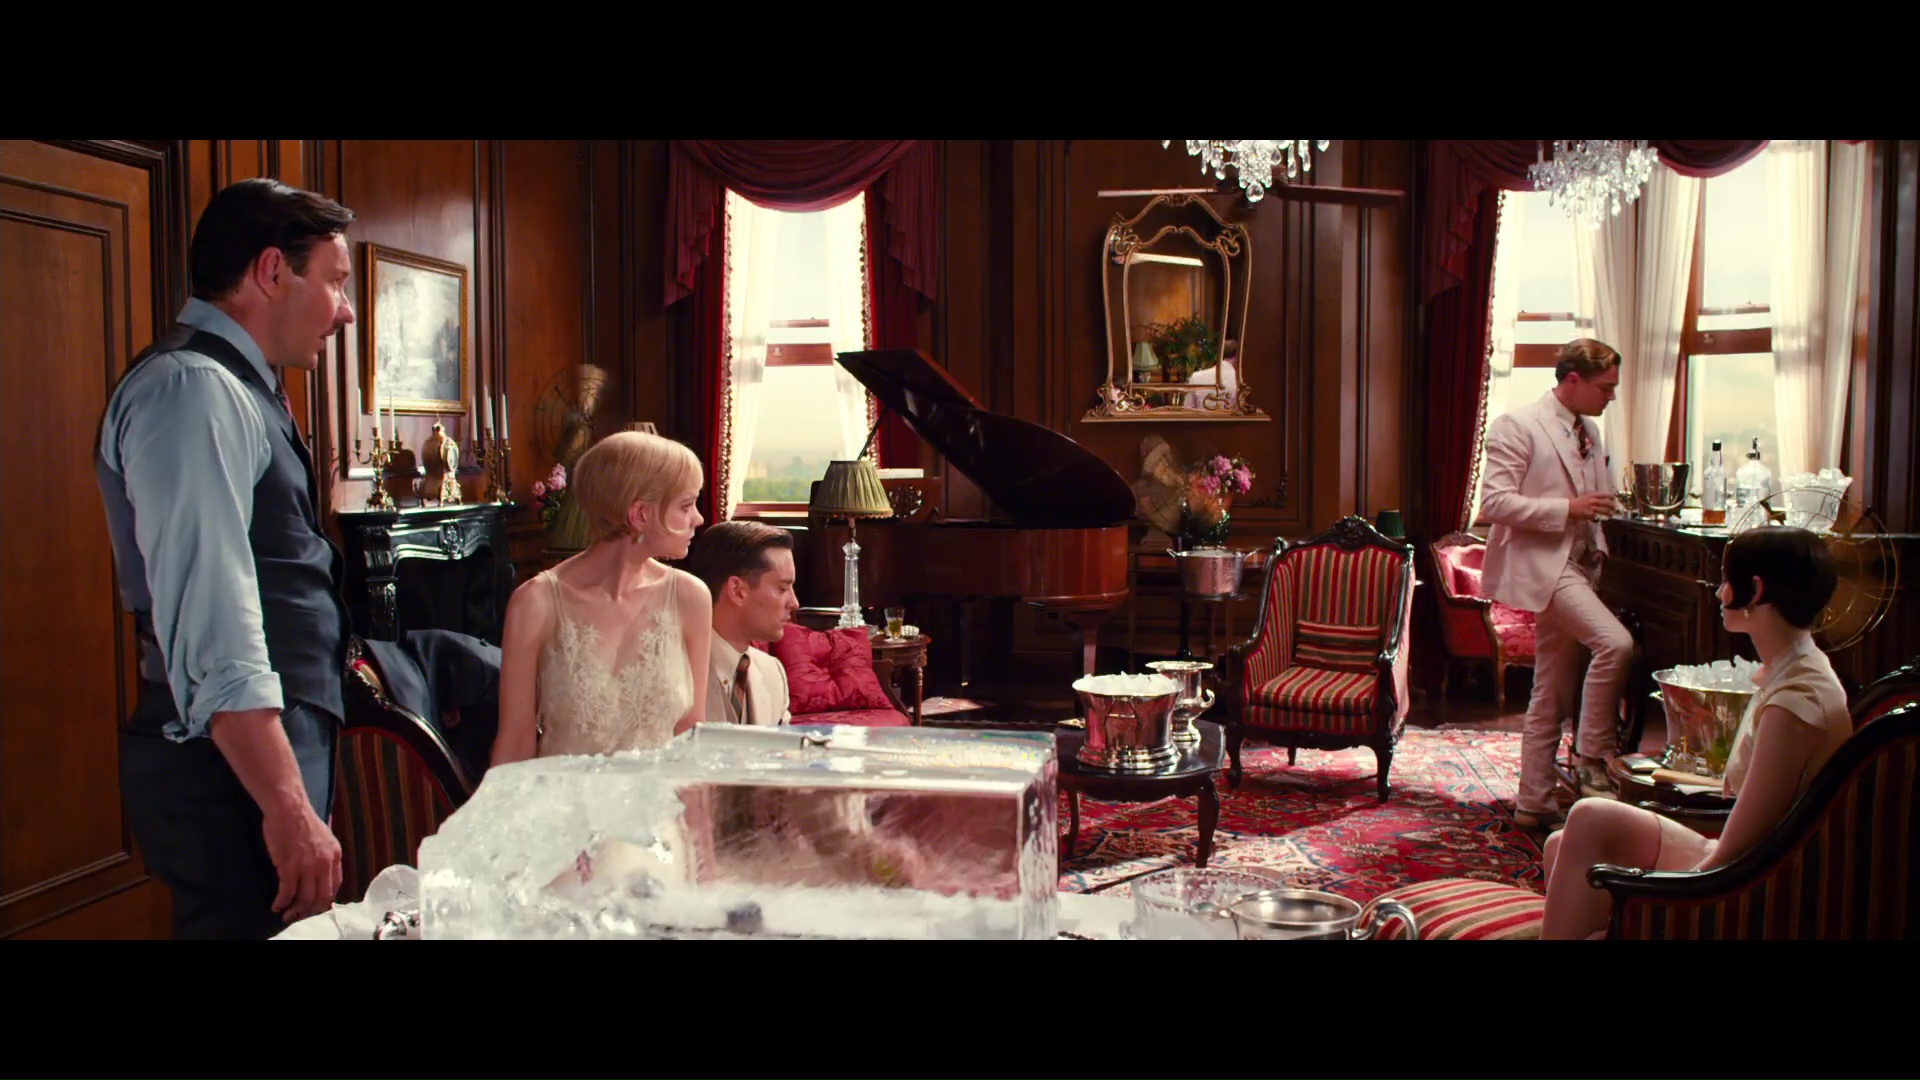 El Gran Gatsby 1080p Lat-Cast-Ing 5.1 (2013) Os3PuIbx_o